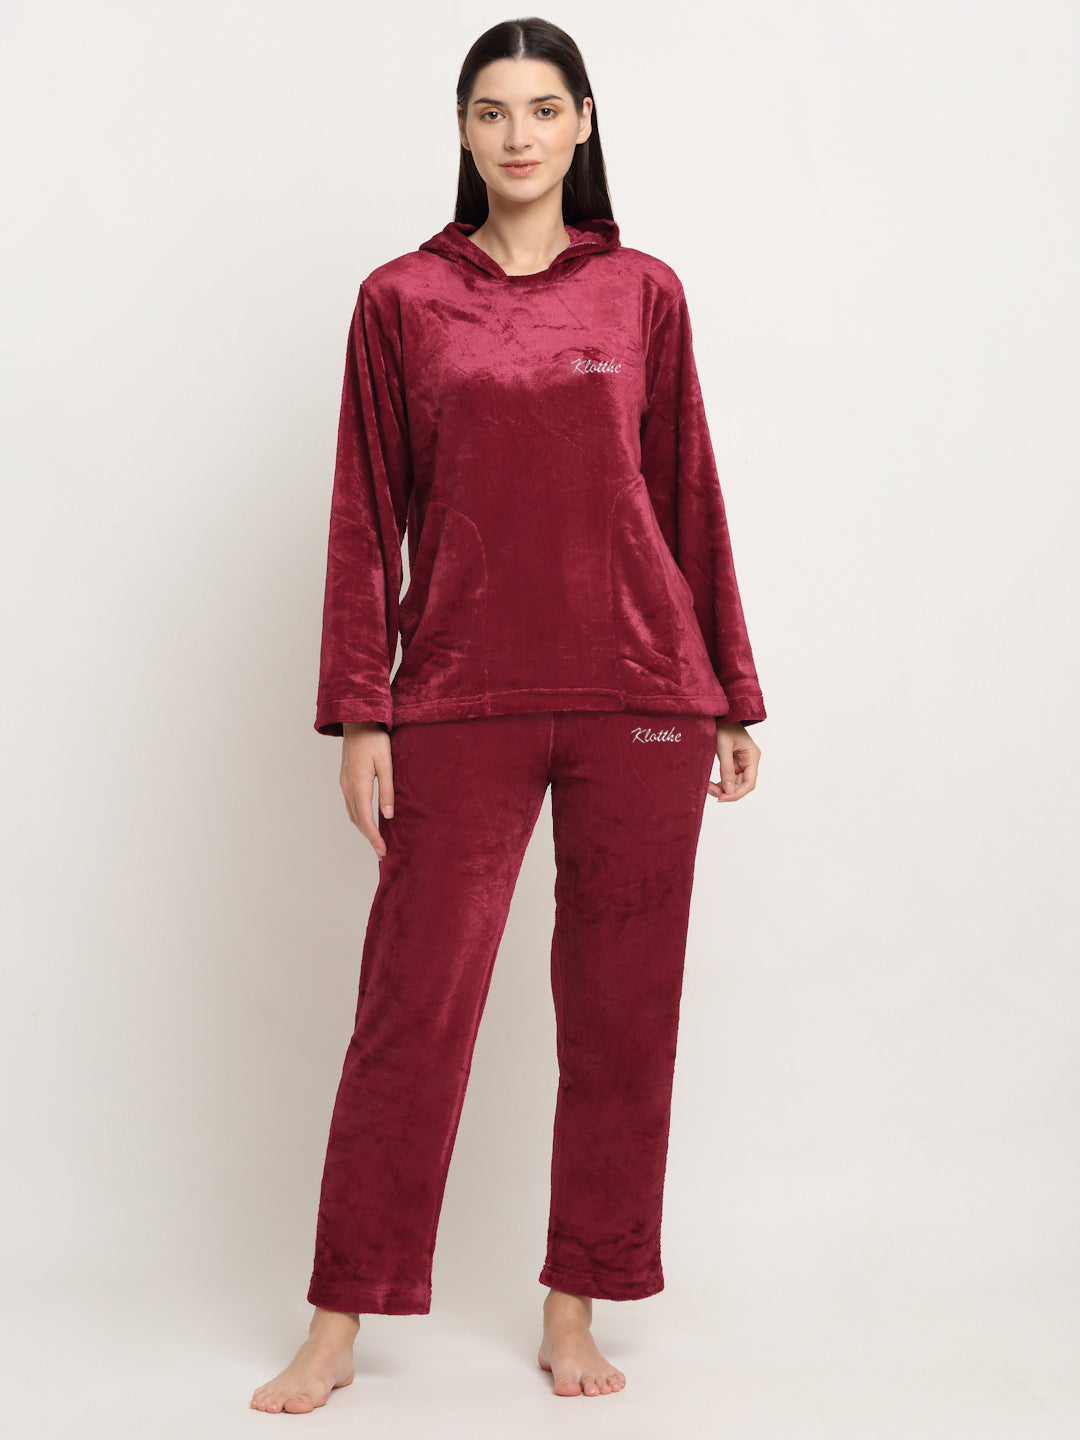 NEW Ladies Brushed Cotton Warm Wyncette Pyjamas Nightwear Sleepwear Size  12-26